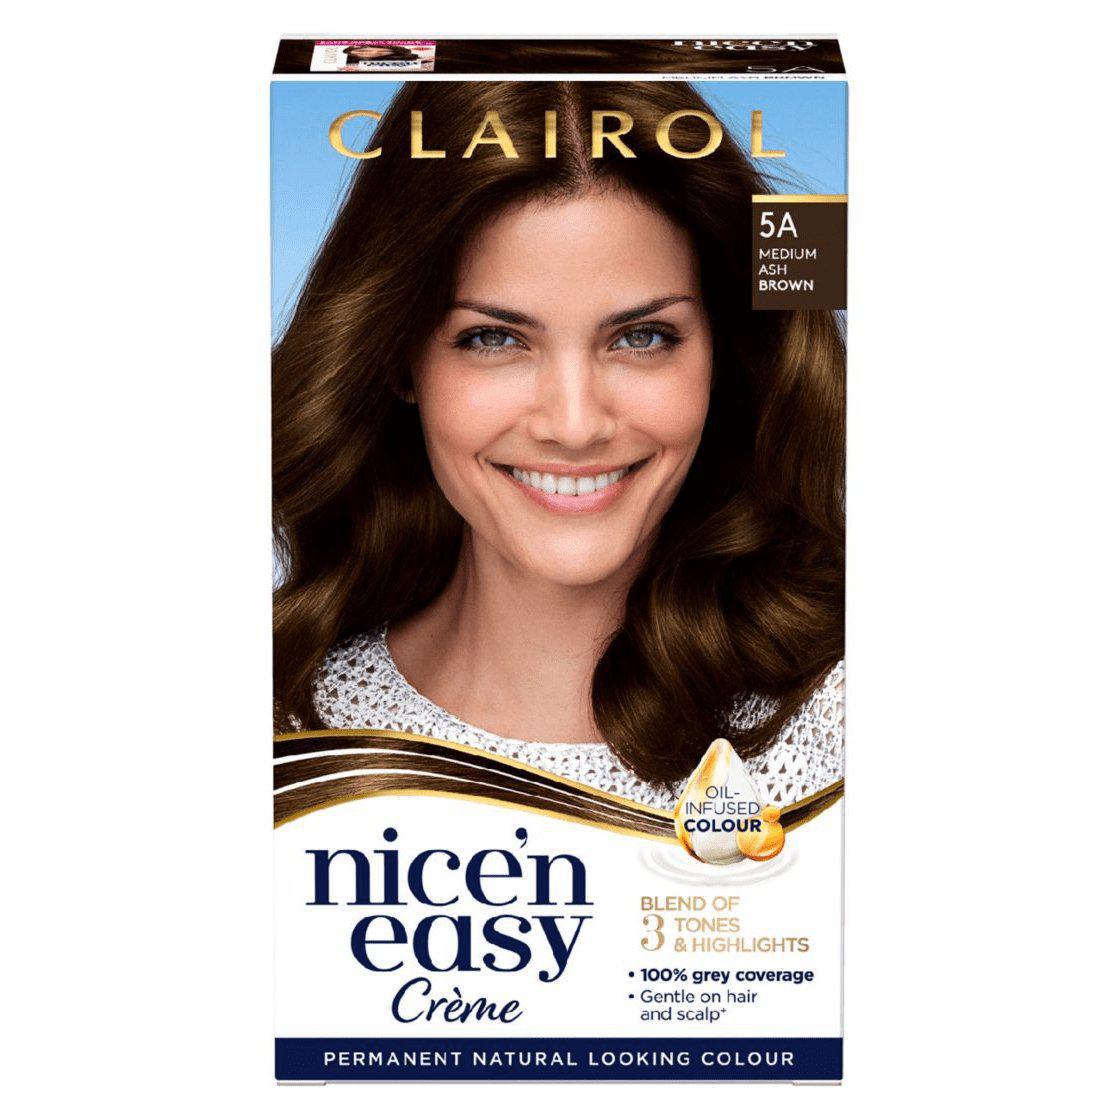 Clairol Nice N Easy Crème Natural Permanent Hair Dye - 5A Medium Ash Brown - Healthxpress.ie